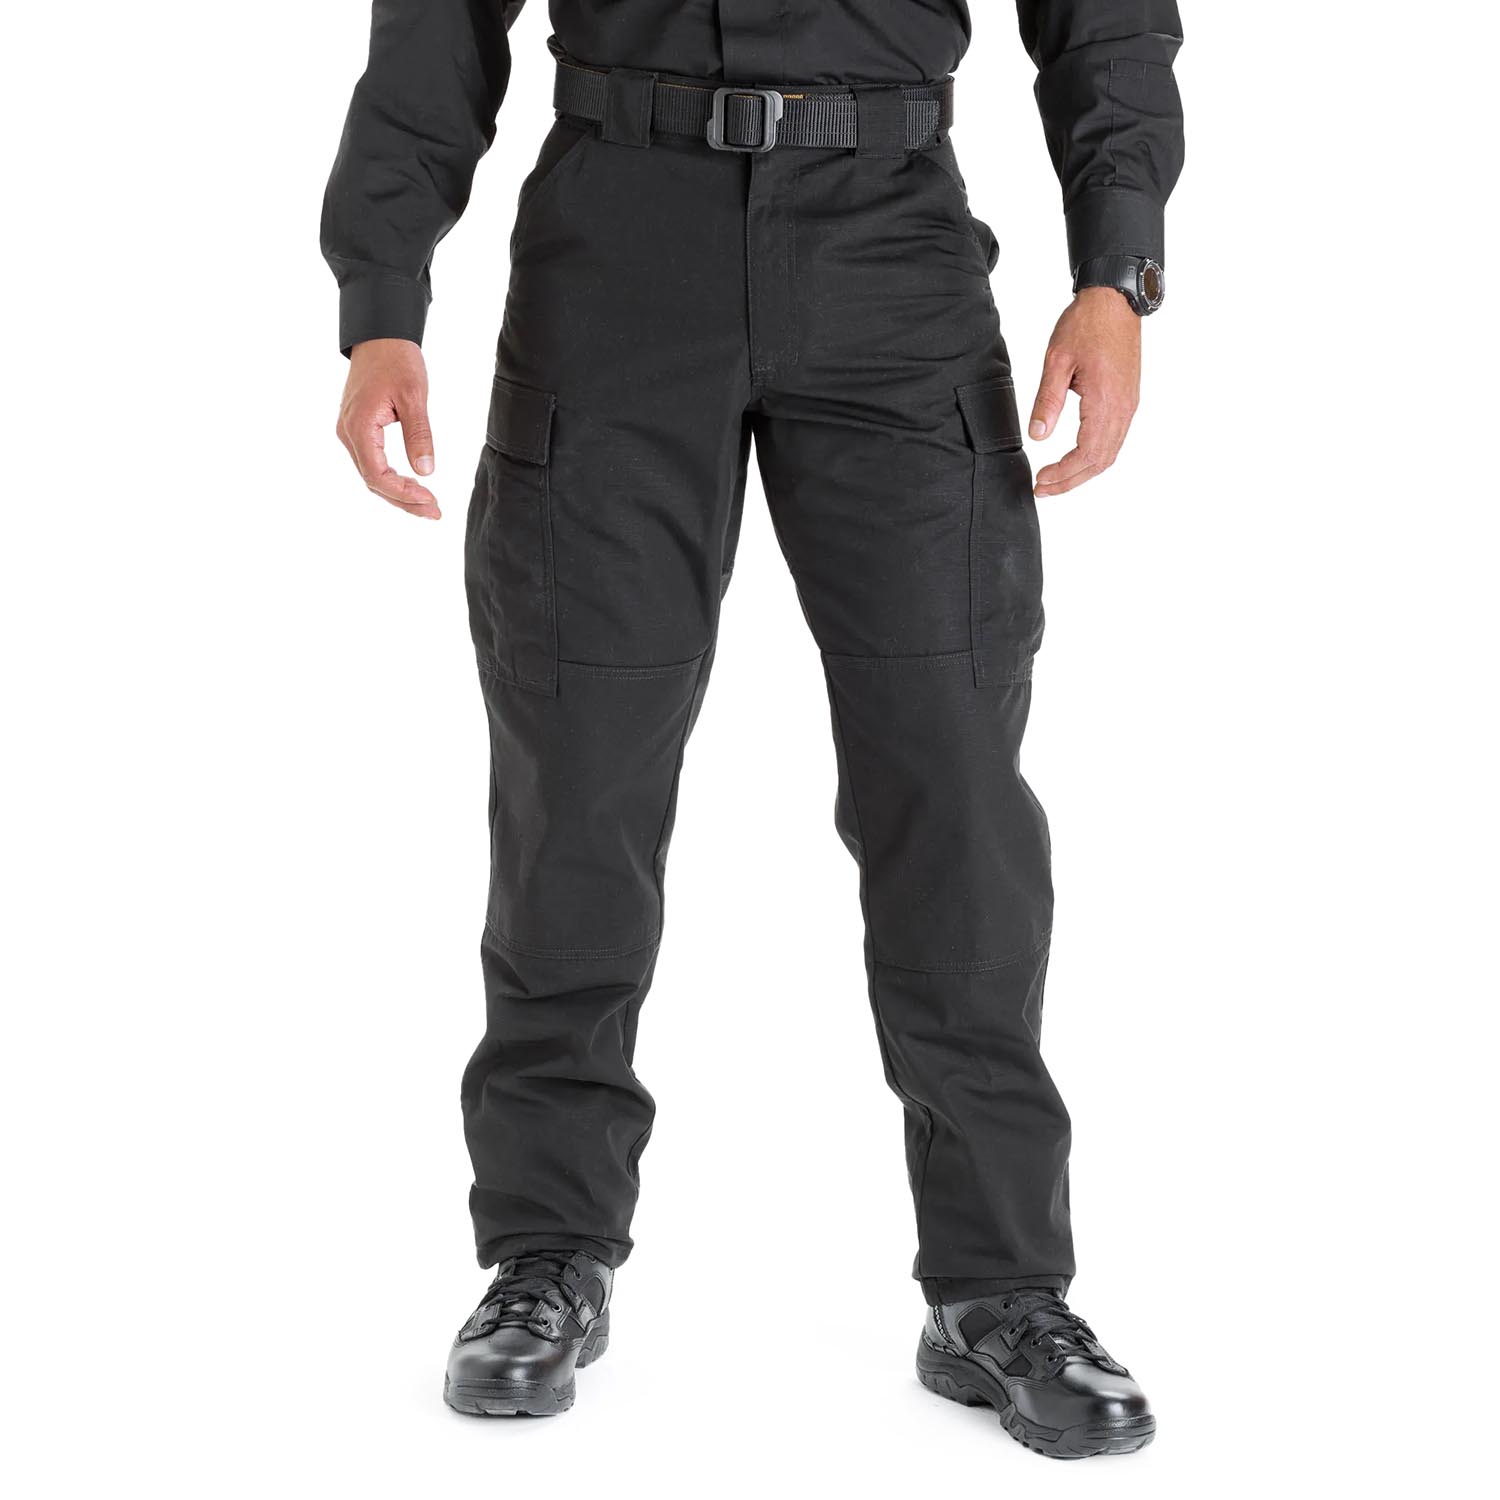 5.11 Tactical Men's Ripstop TDU Pants.